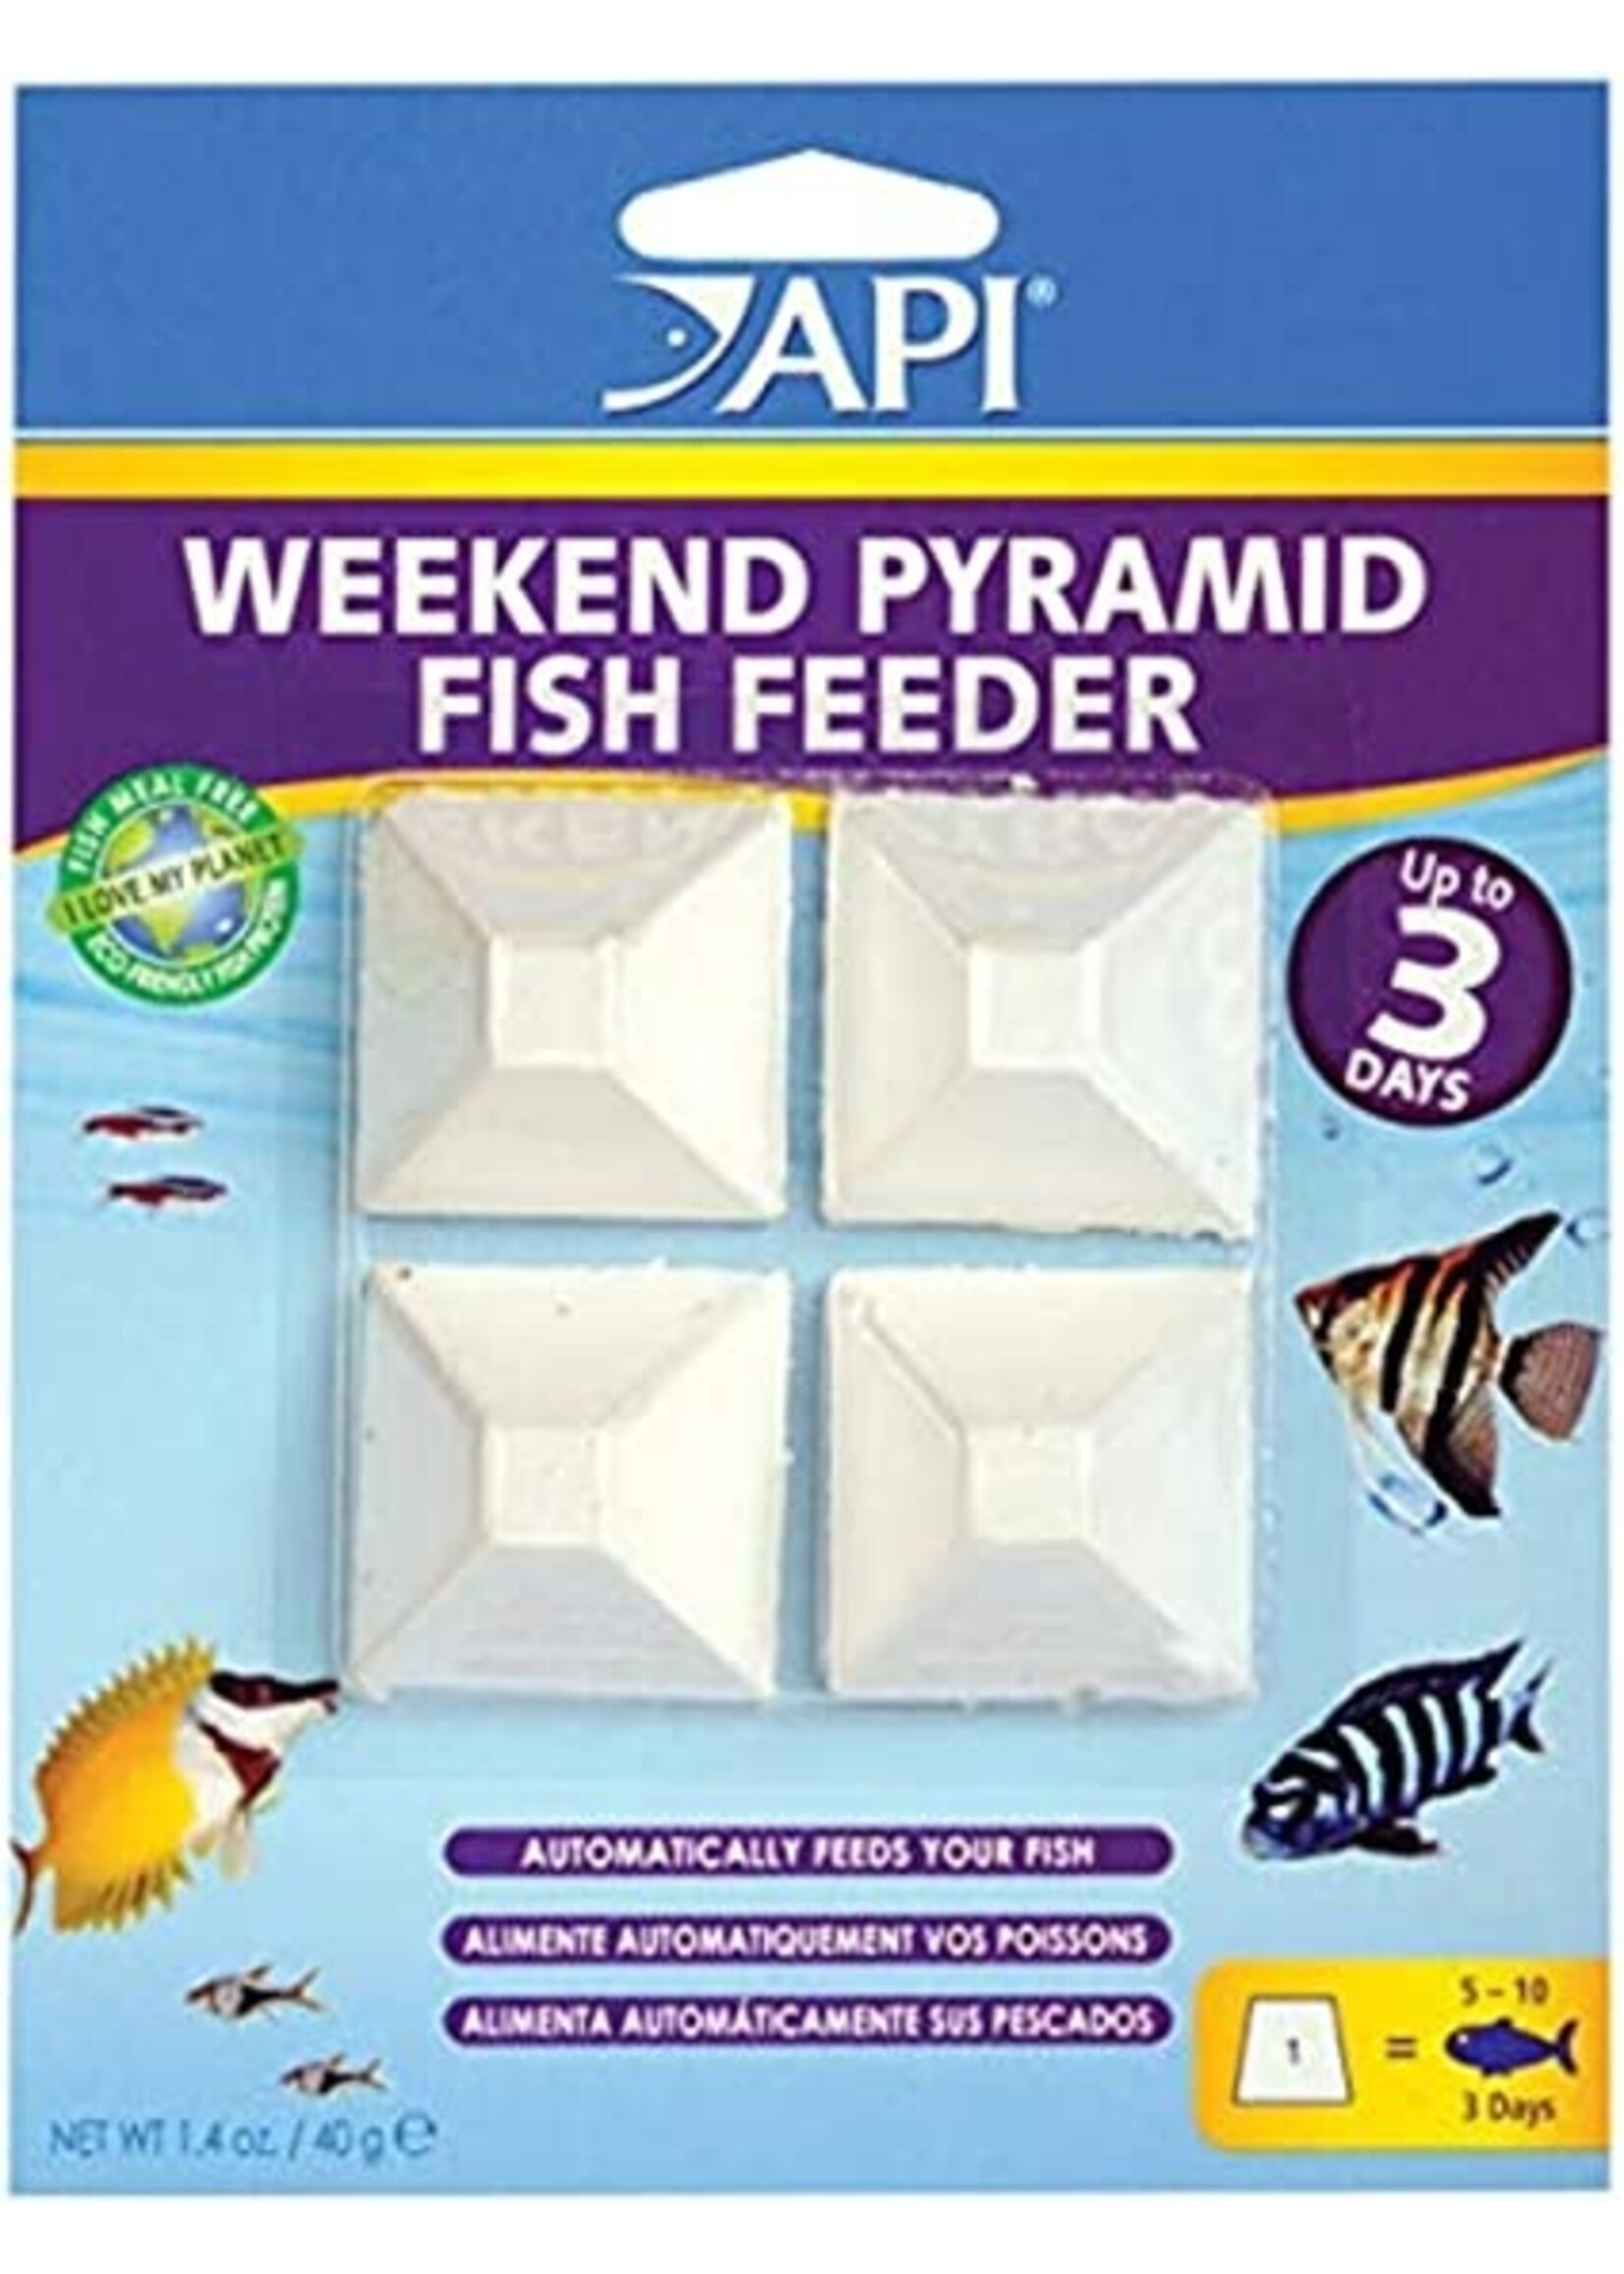 API API Weekend Pyramid Fish Feeder up to 3days 4Blocks